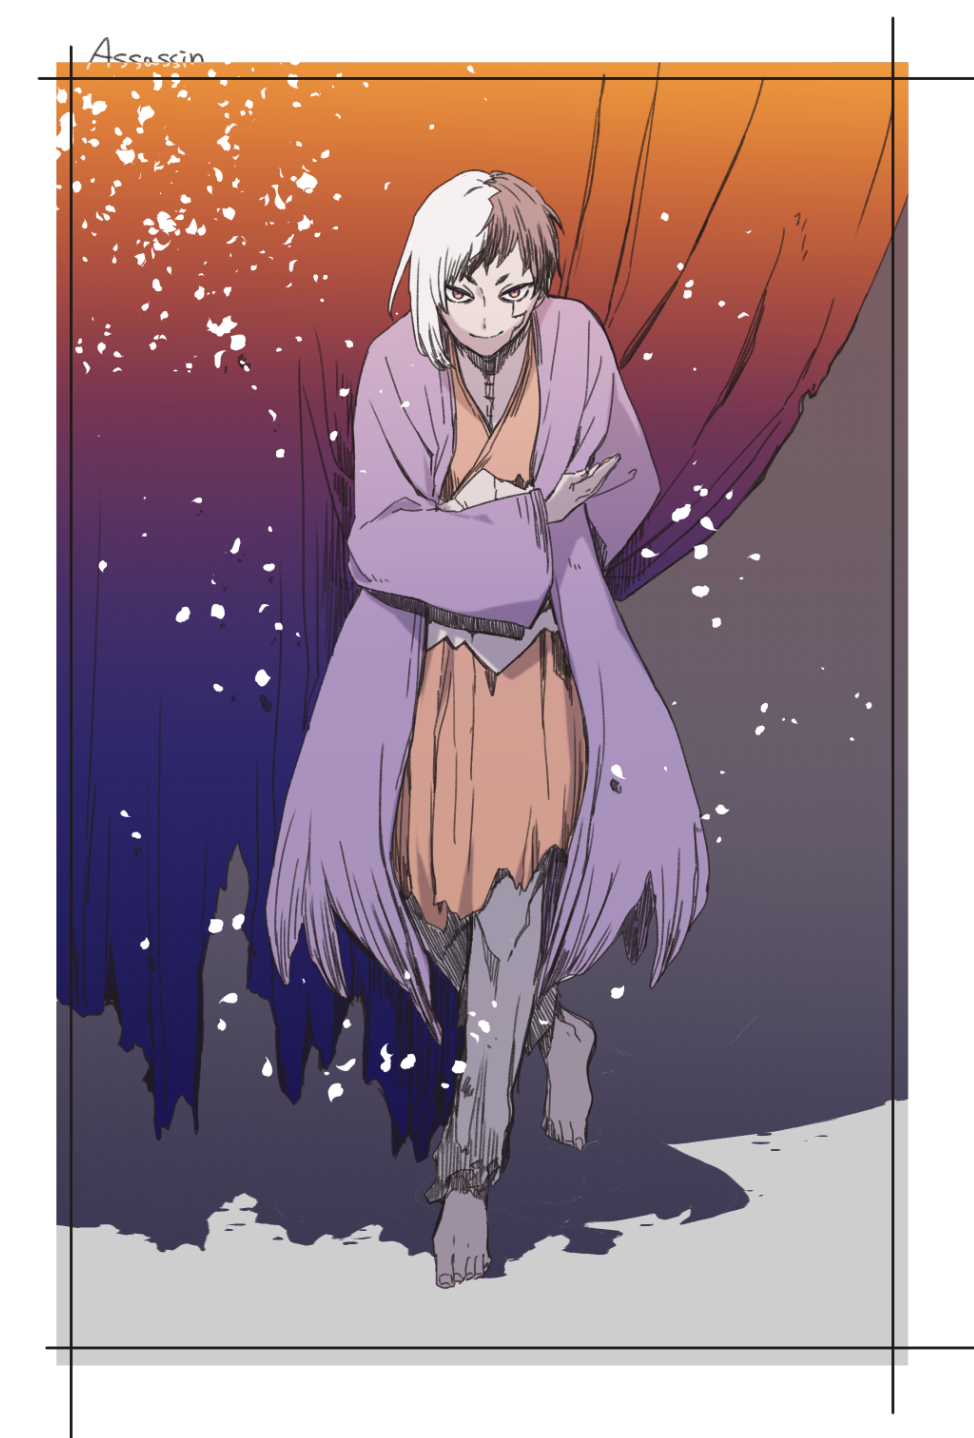 Asagiri Gen. STONE Anime Image Board